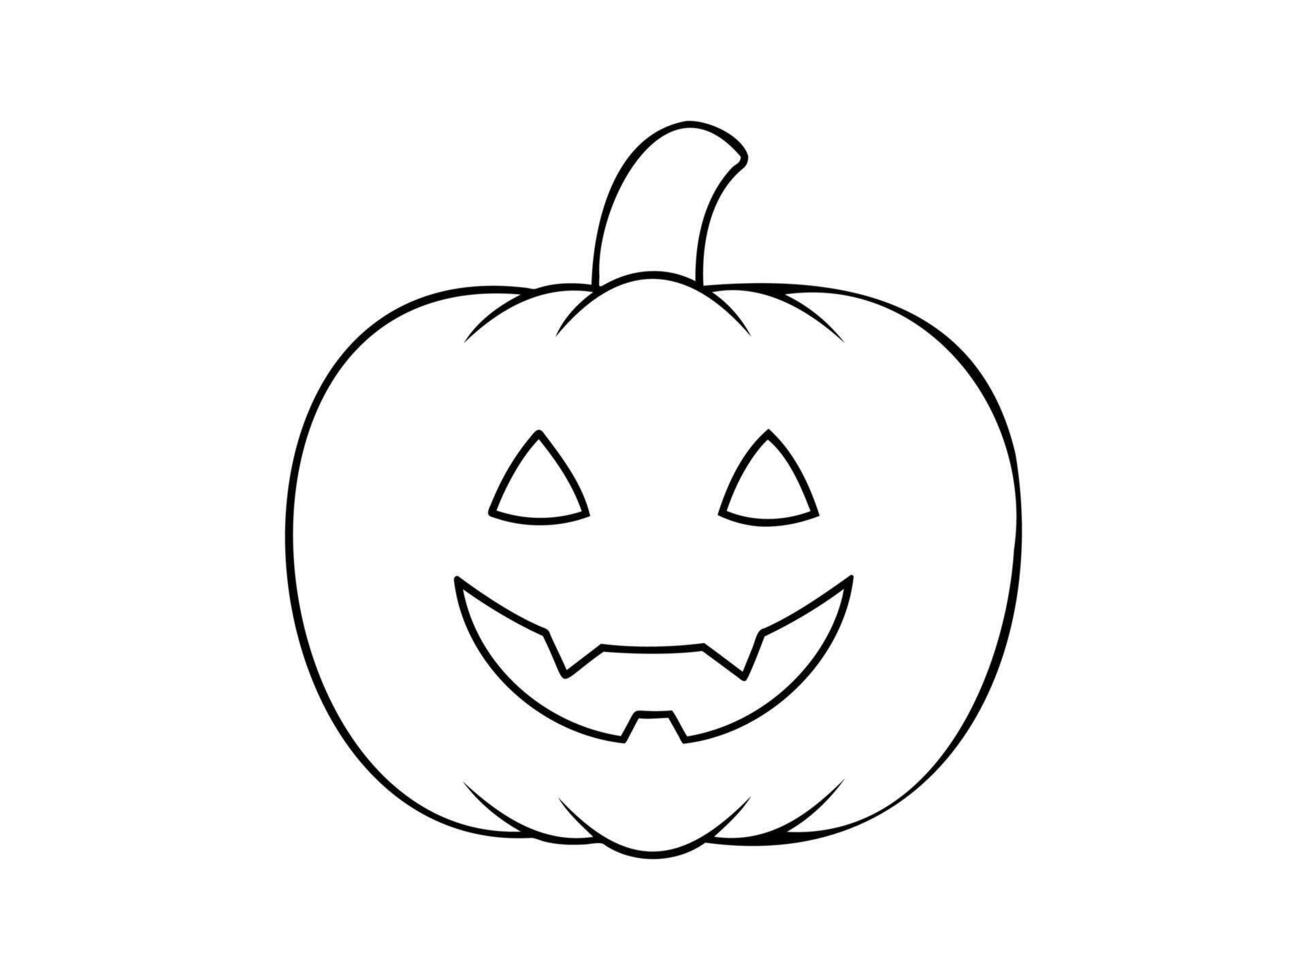 Black outline of smiling Halloween pumpkin. Illustration. Friendly Jack-o-lantern. Isolated on white background. Concept of Halloween, festive decor, autumn celebration, October tradition. Icon. vector